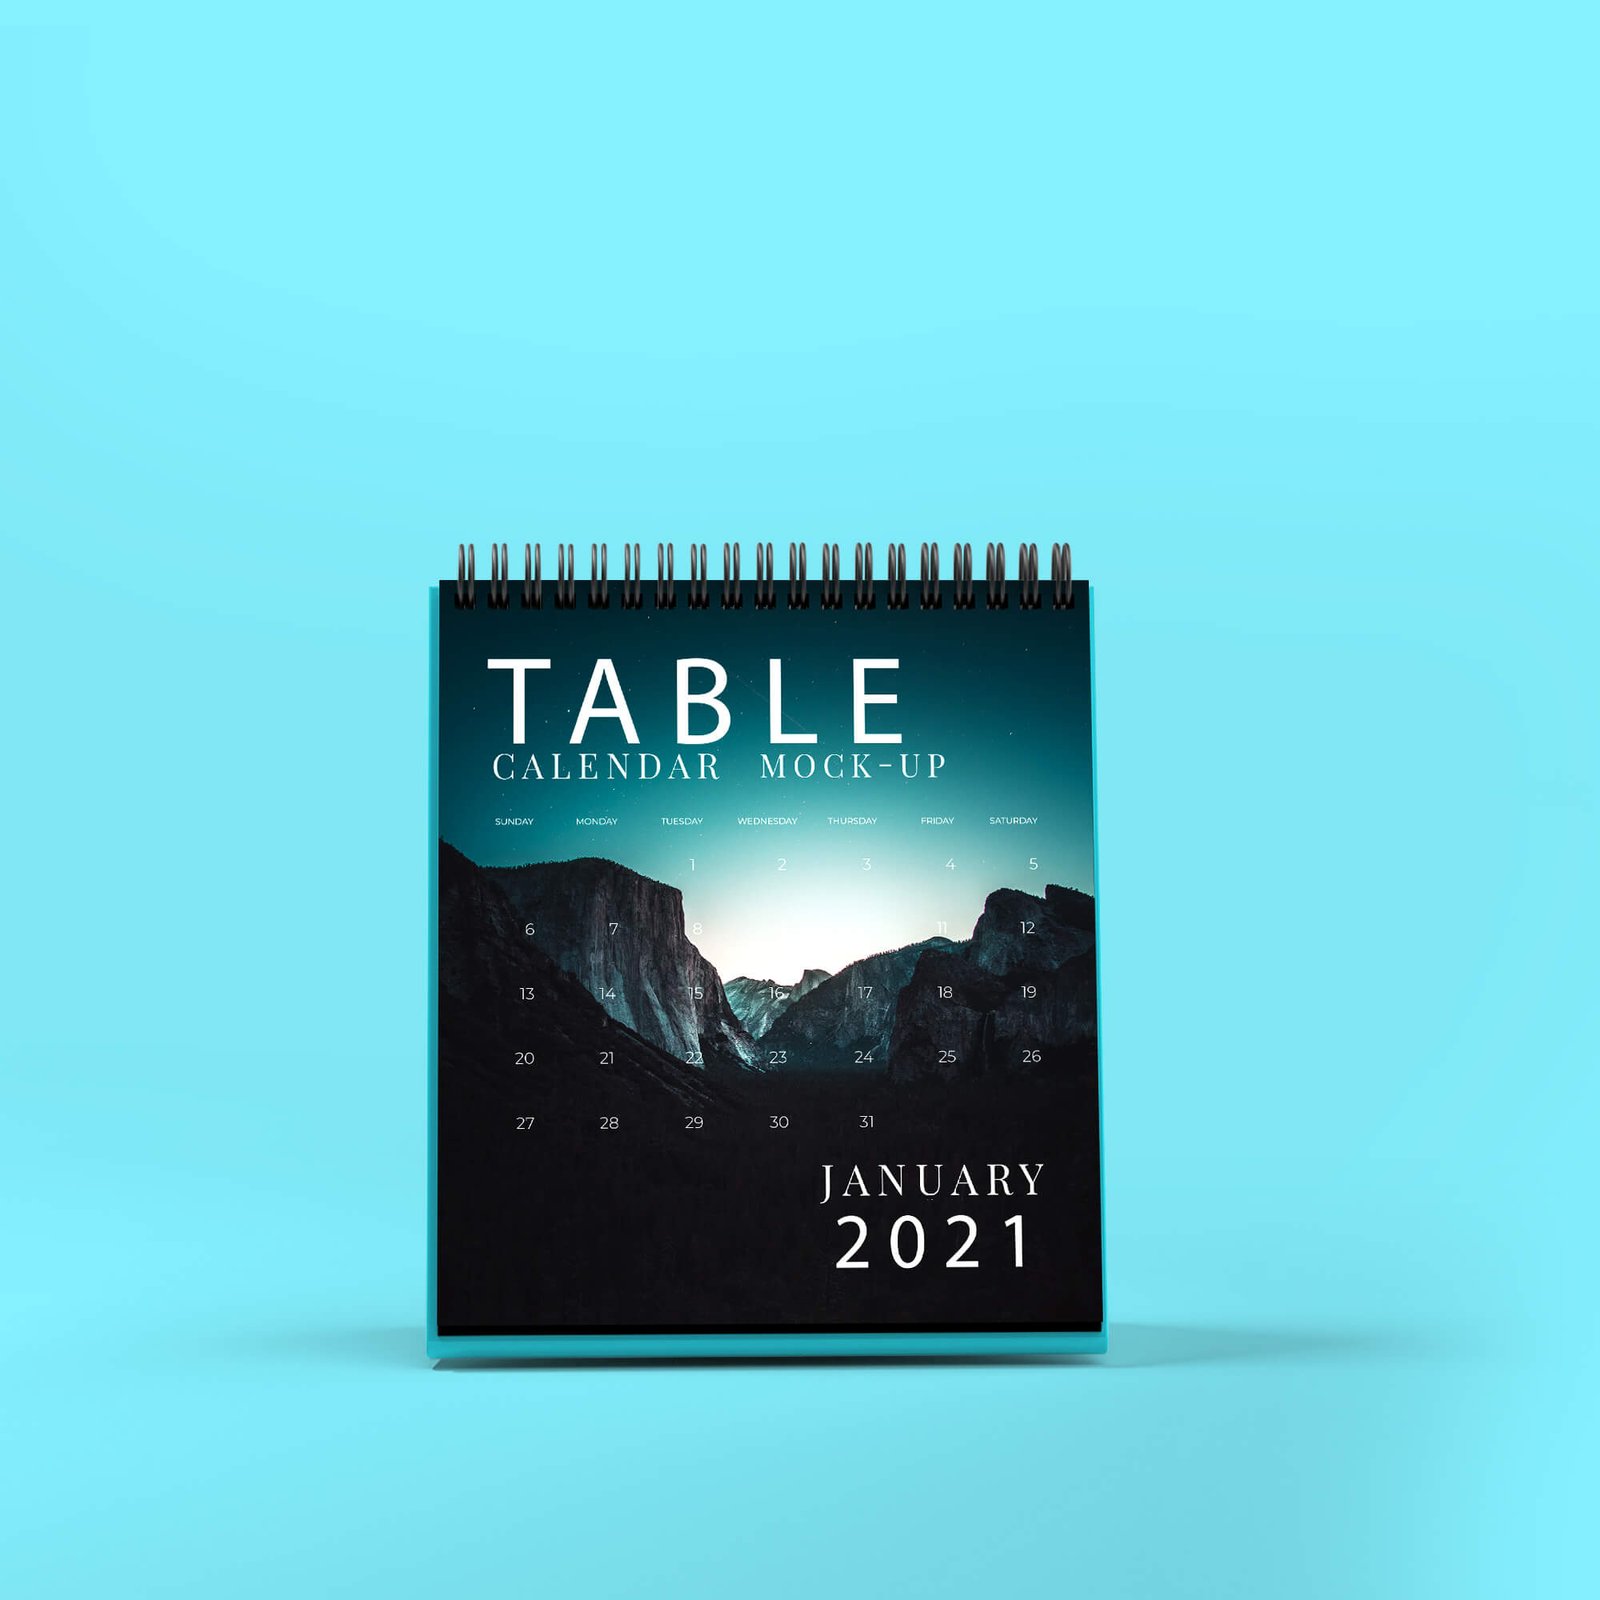 Design Free Table Calendar Mockup PSD Template